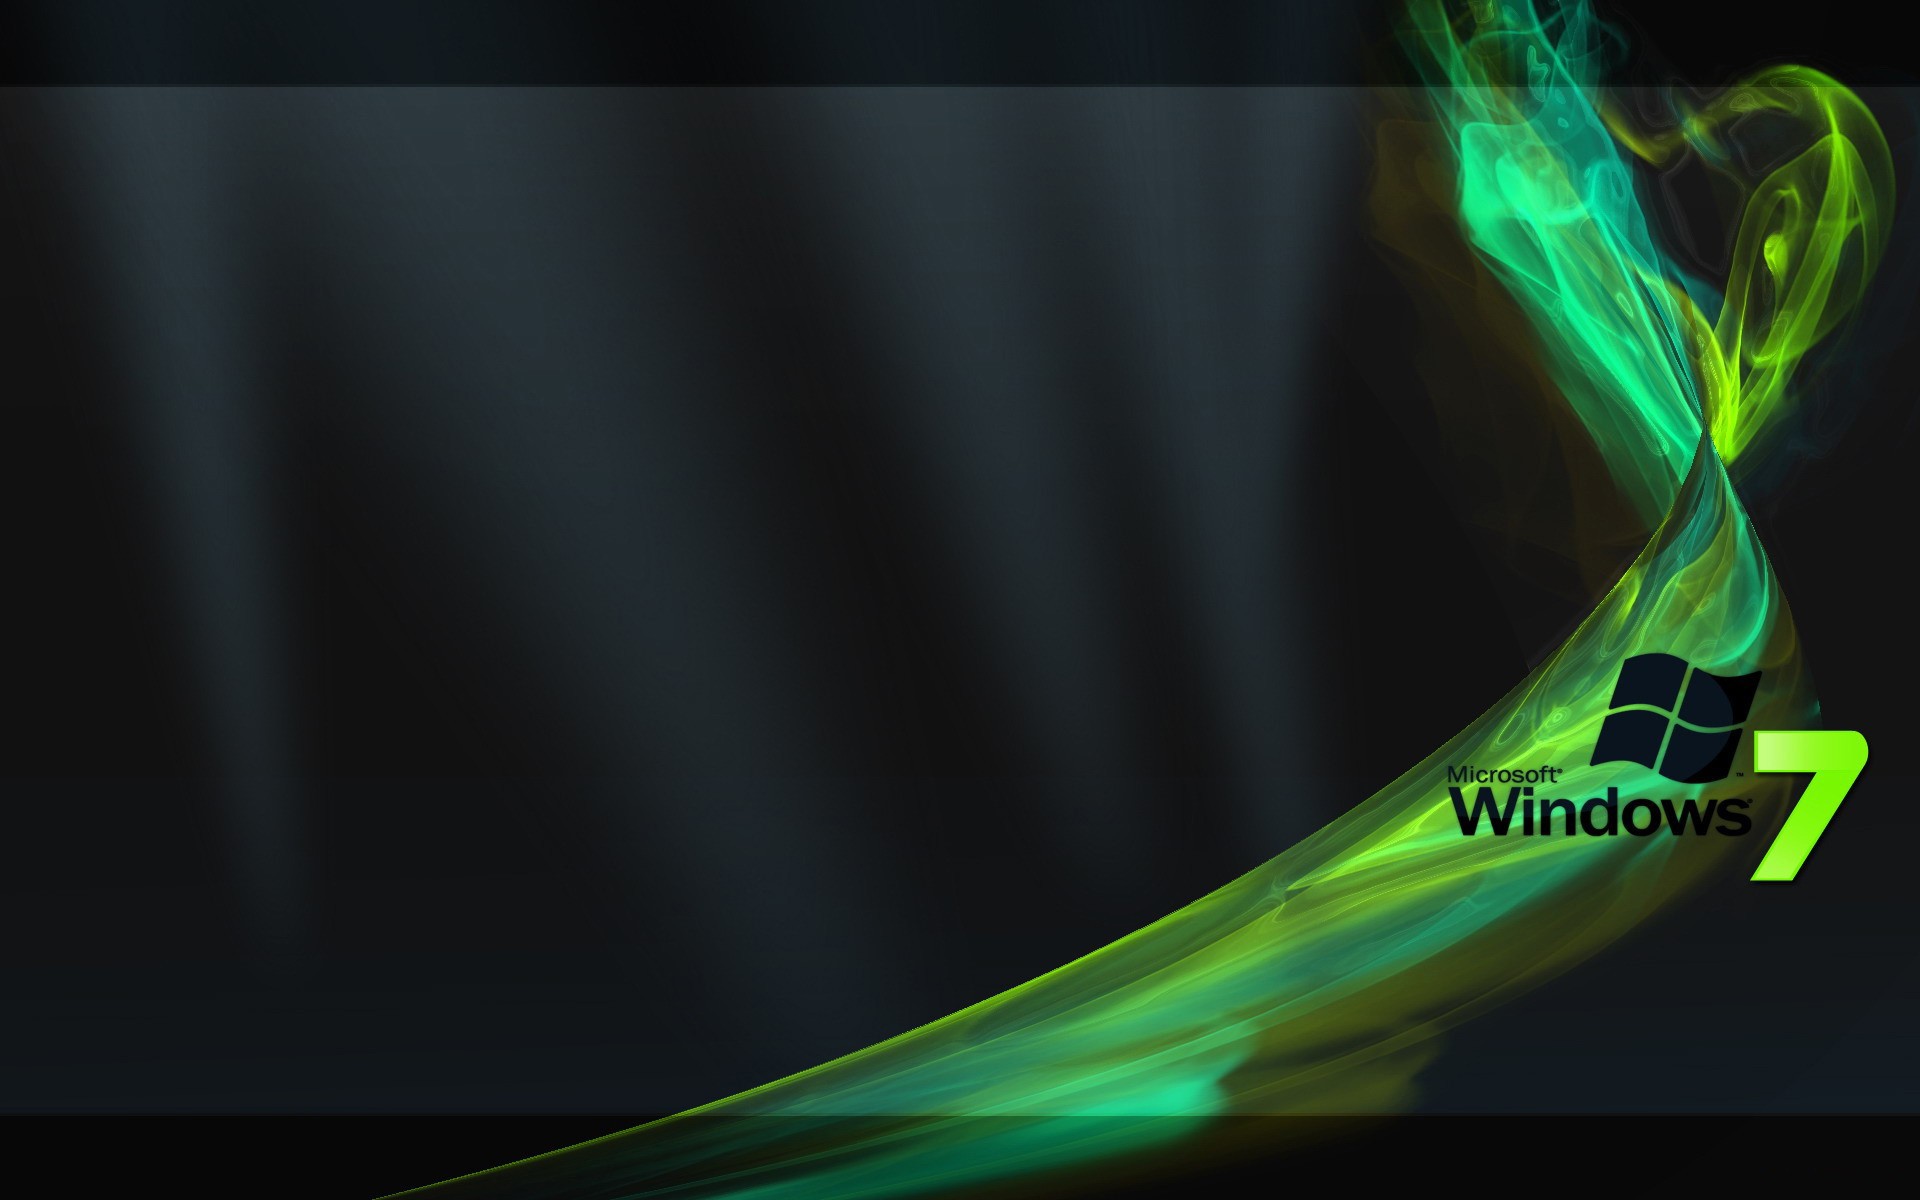 Windows 7 Wallpaper Desktop for Desktop - Uncalke.com